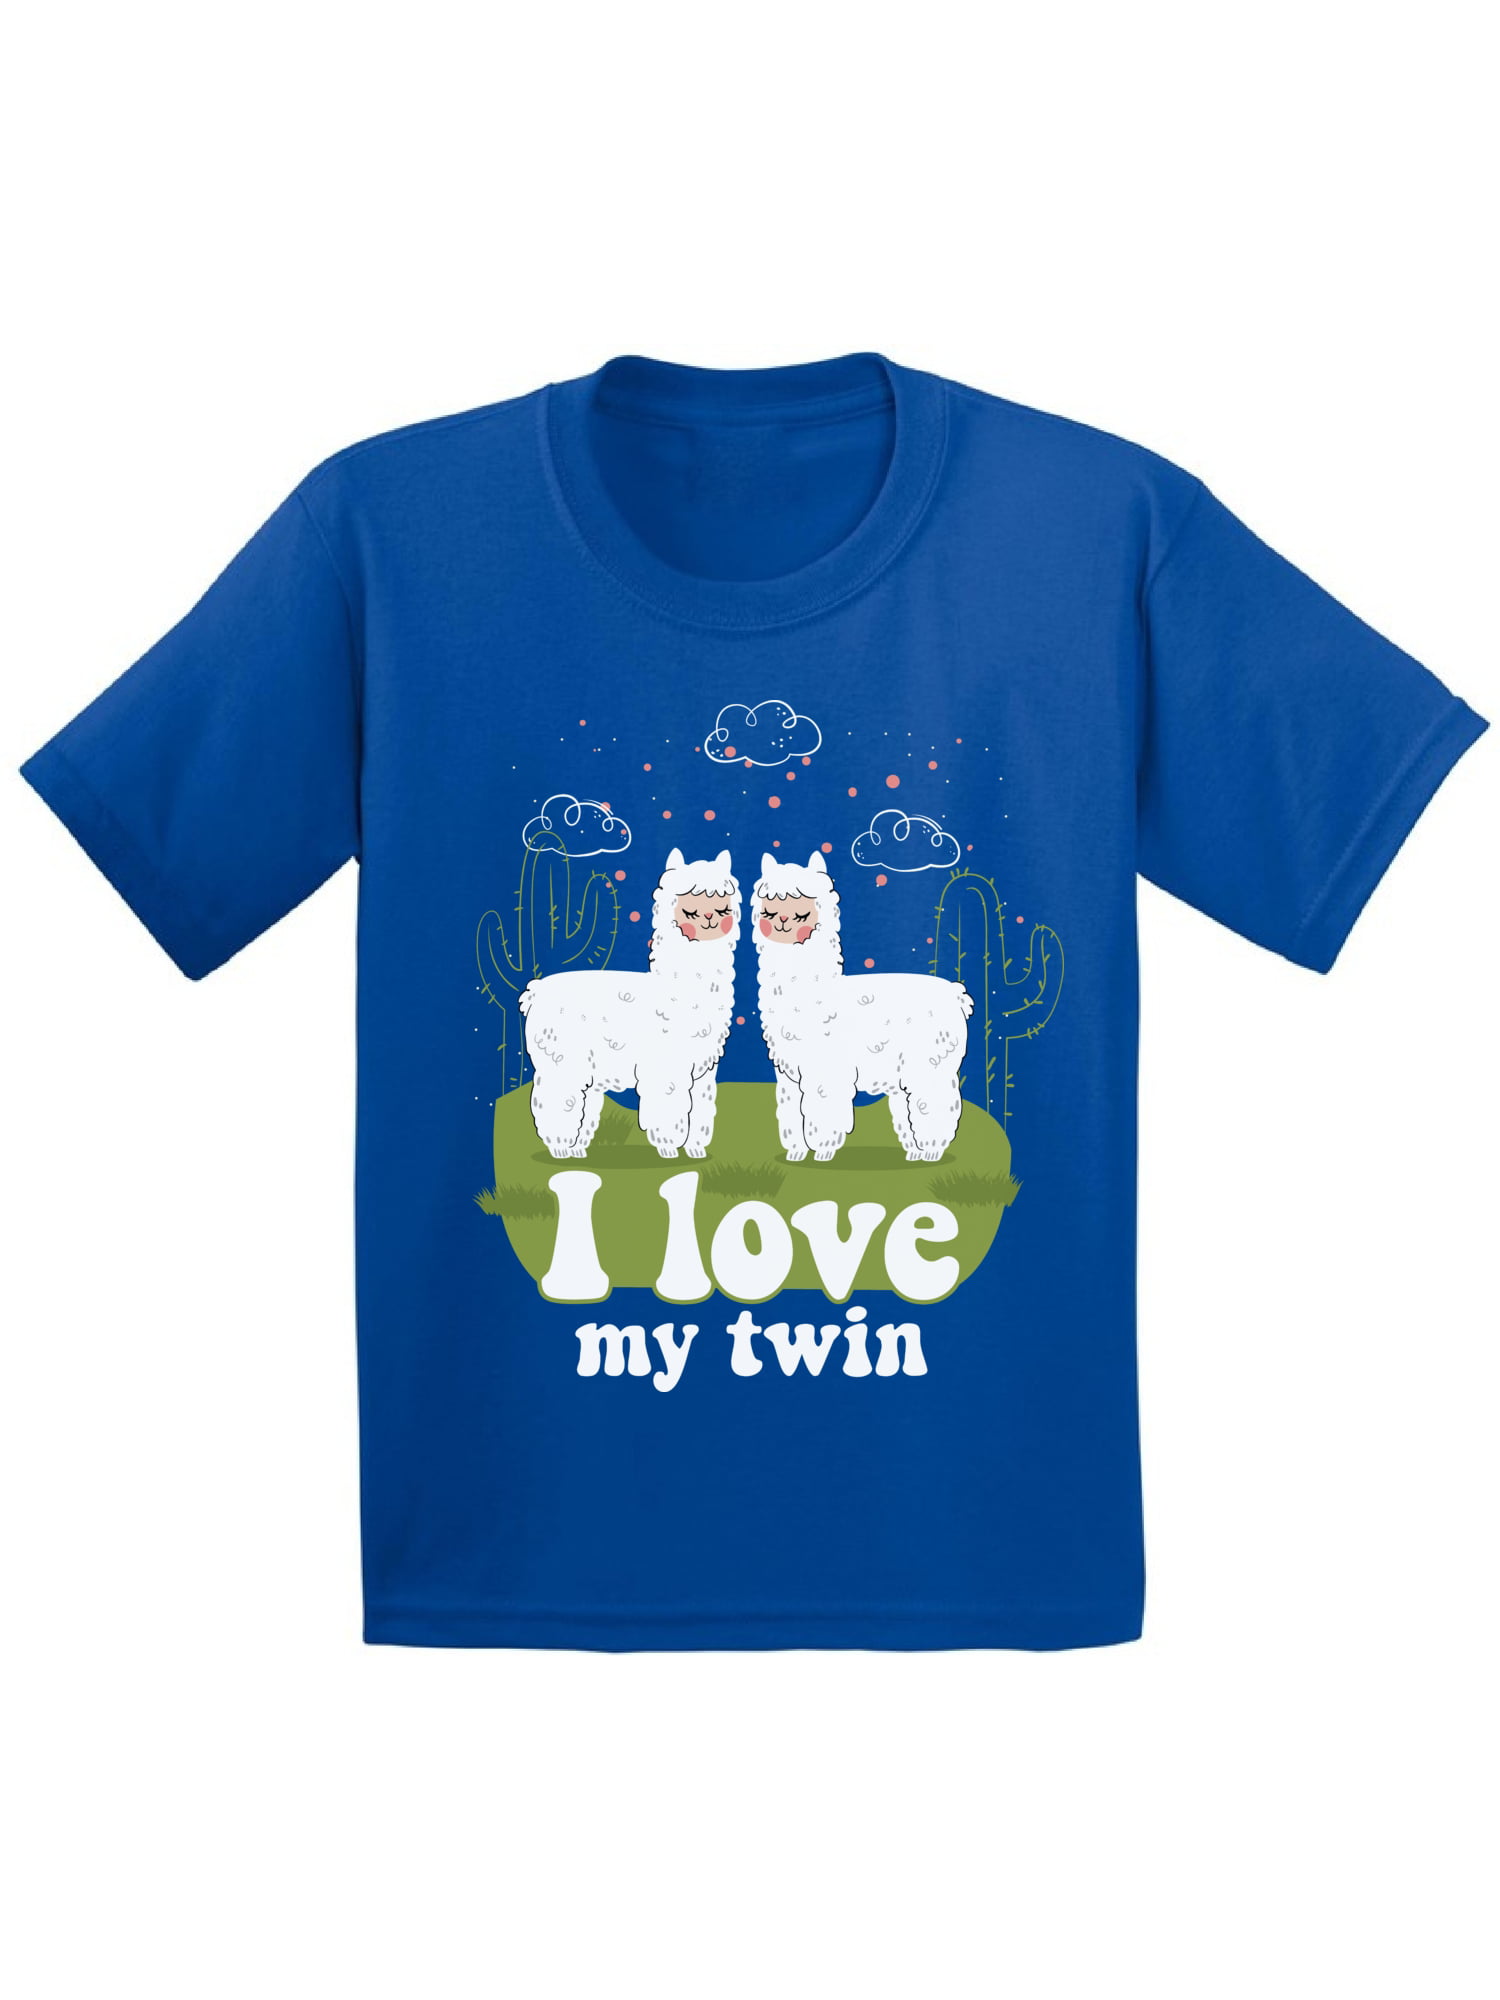 twins birthday shirts